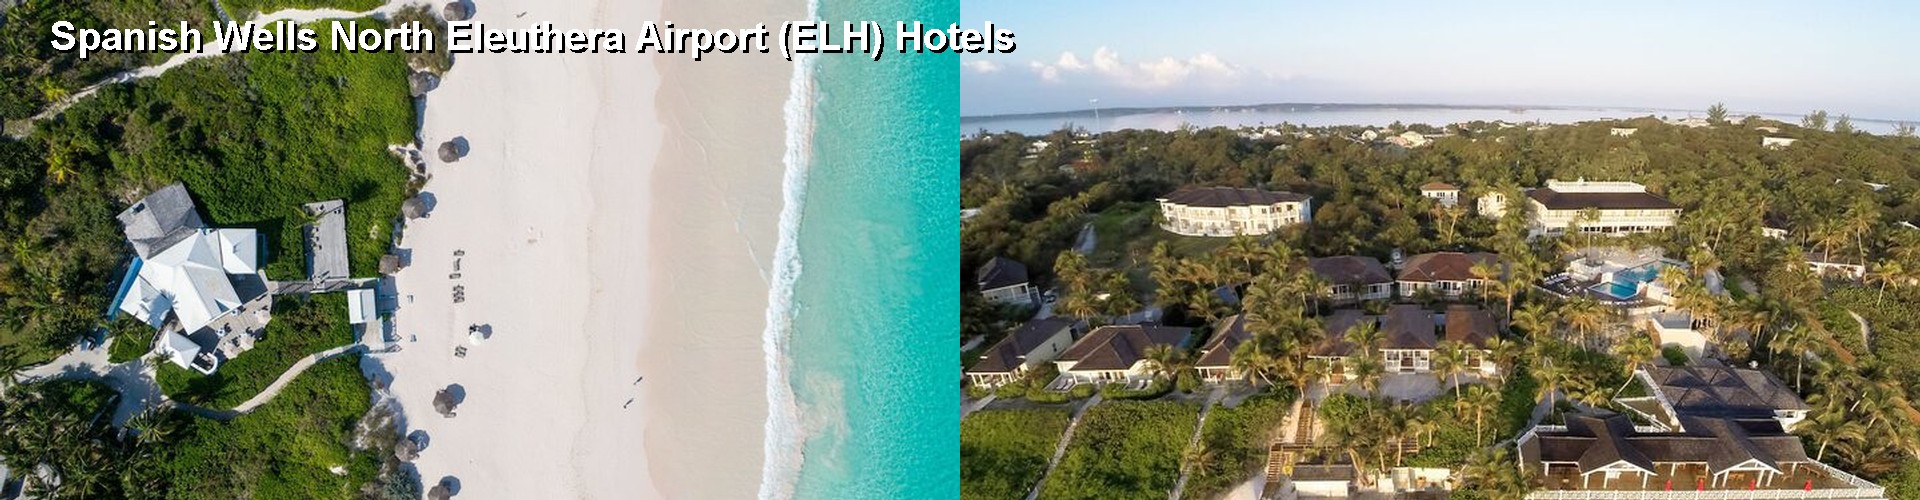 3 Best Hotels near Spanish Wells North Eleuthera Airport (ELH)